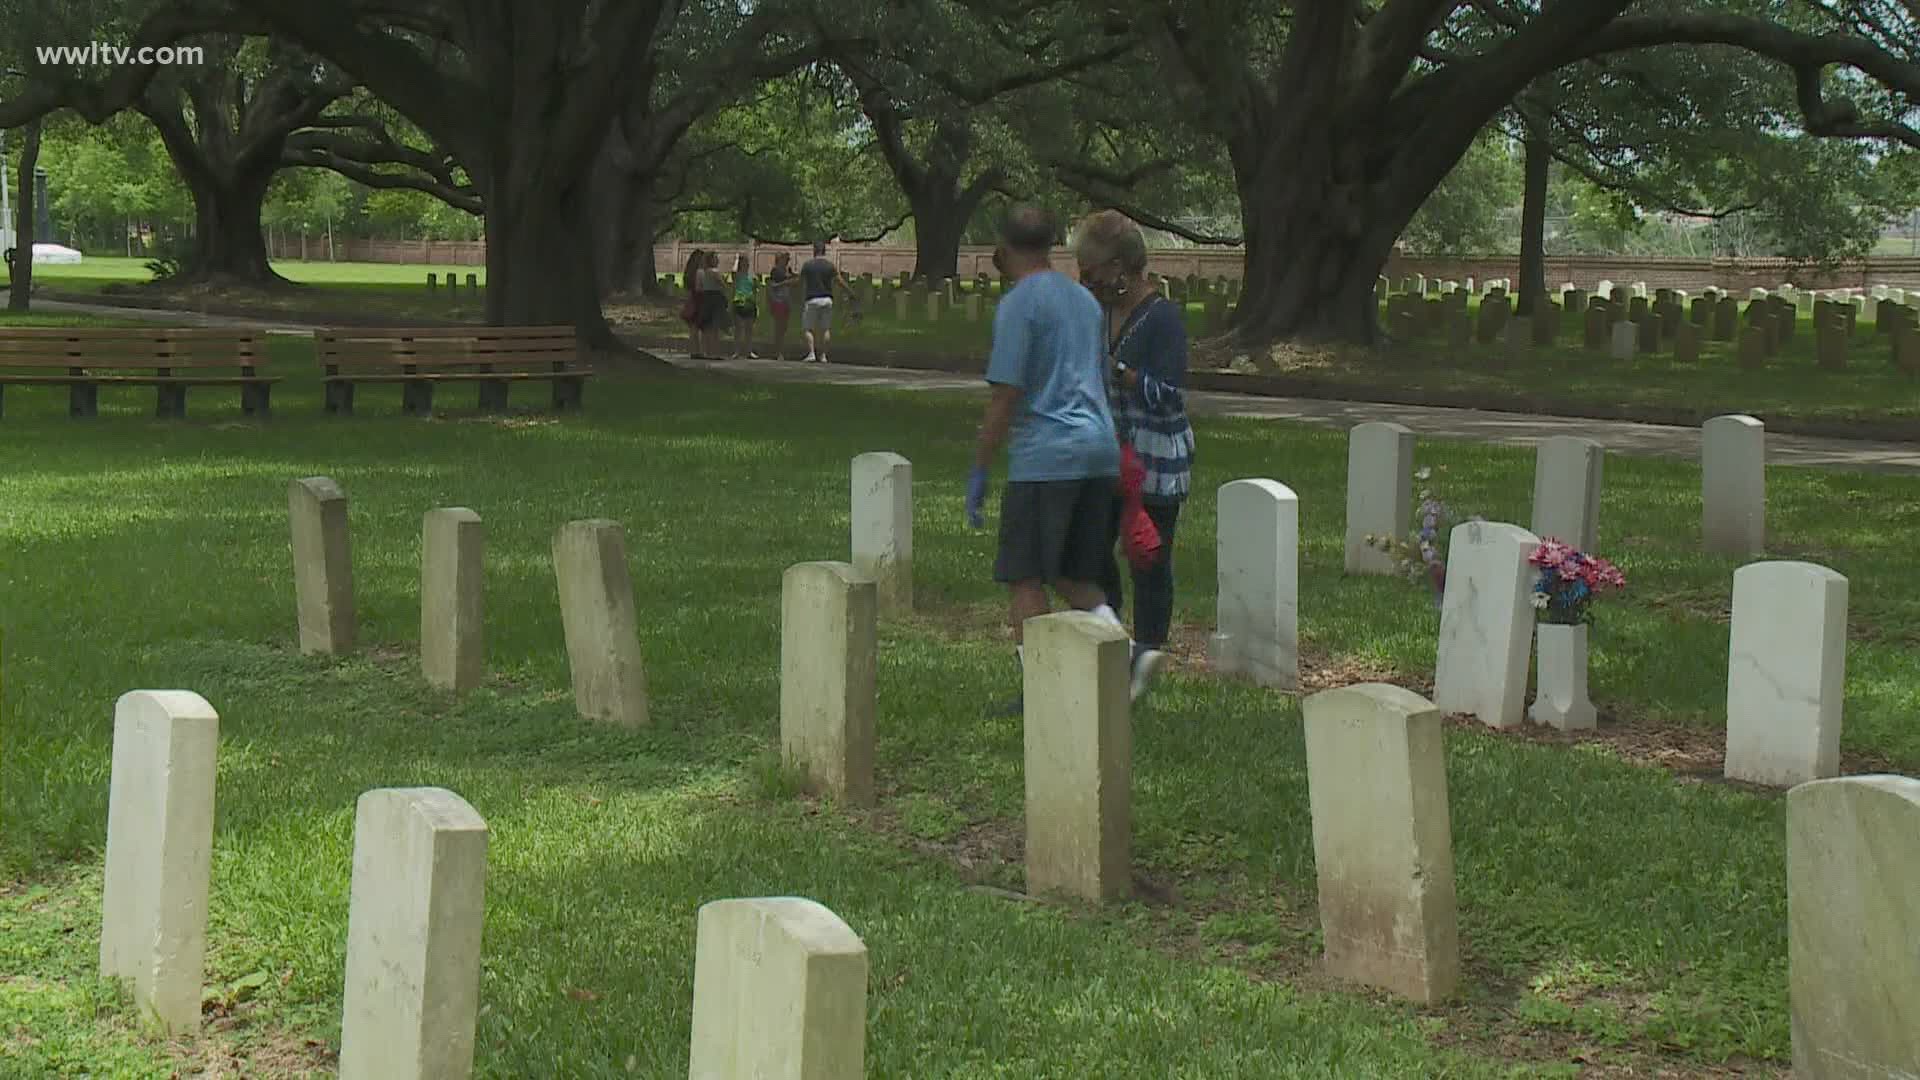 Veterans lost to coronavirus honored on Memorial day